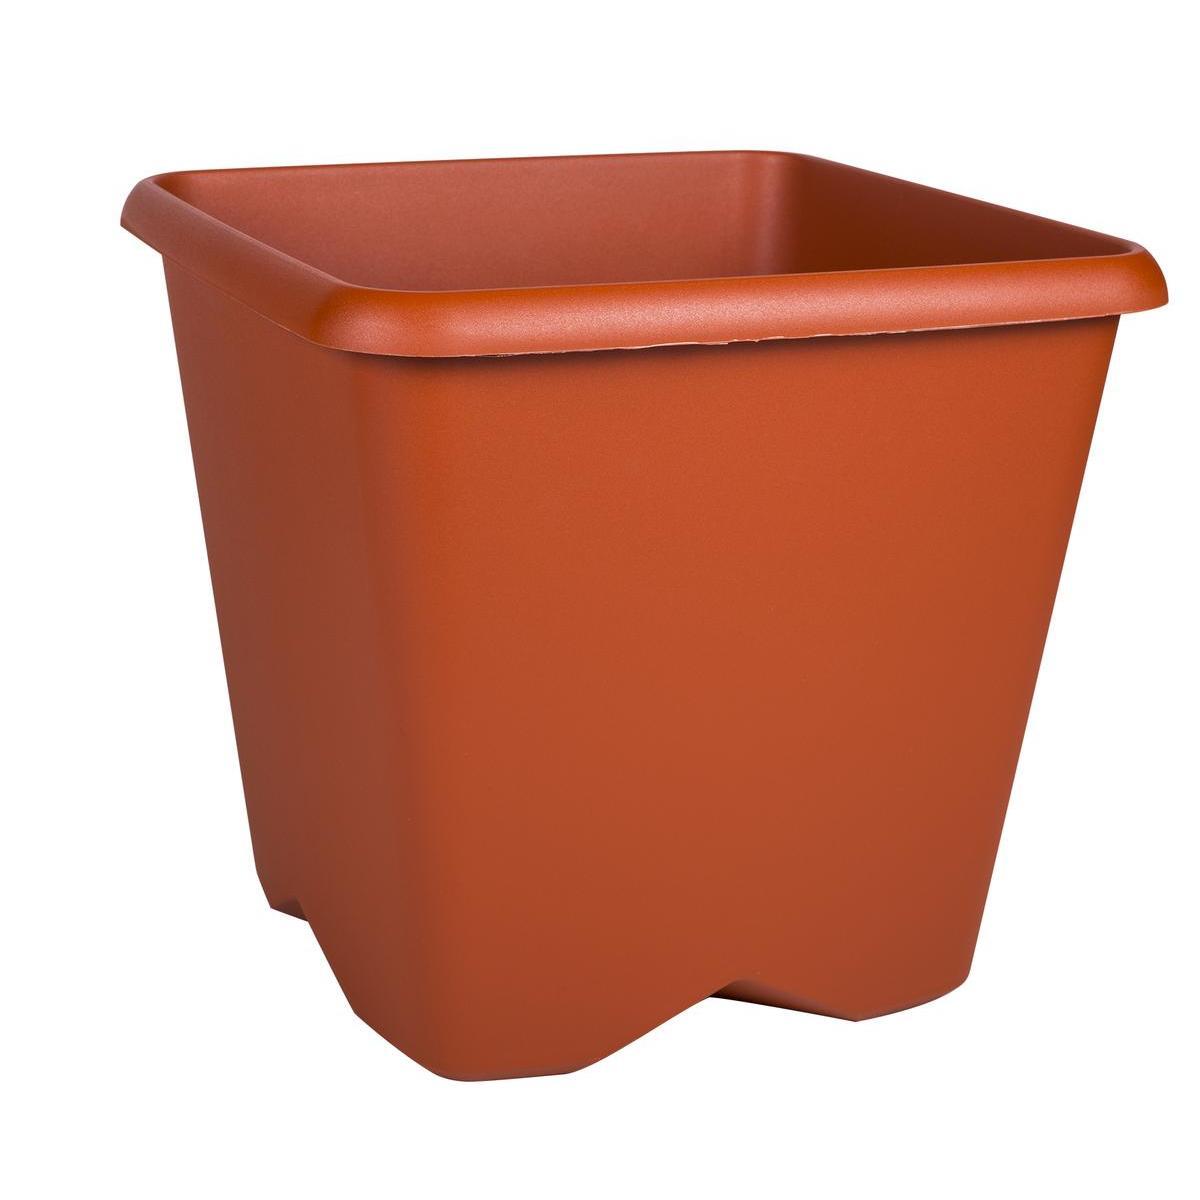 Pot Chorus - L 29.5 x H 27.3 x l 29.5 cm - Orange terracotta